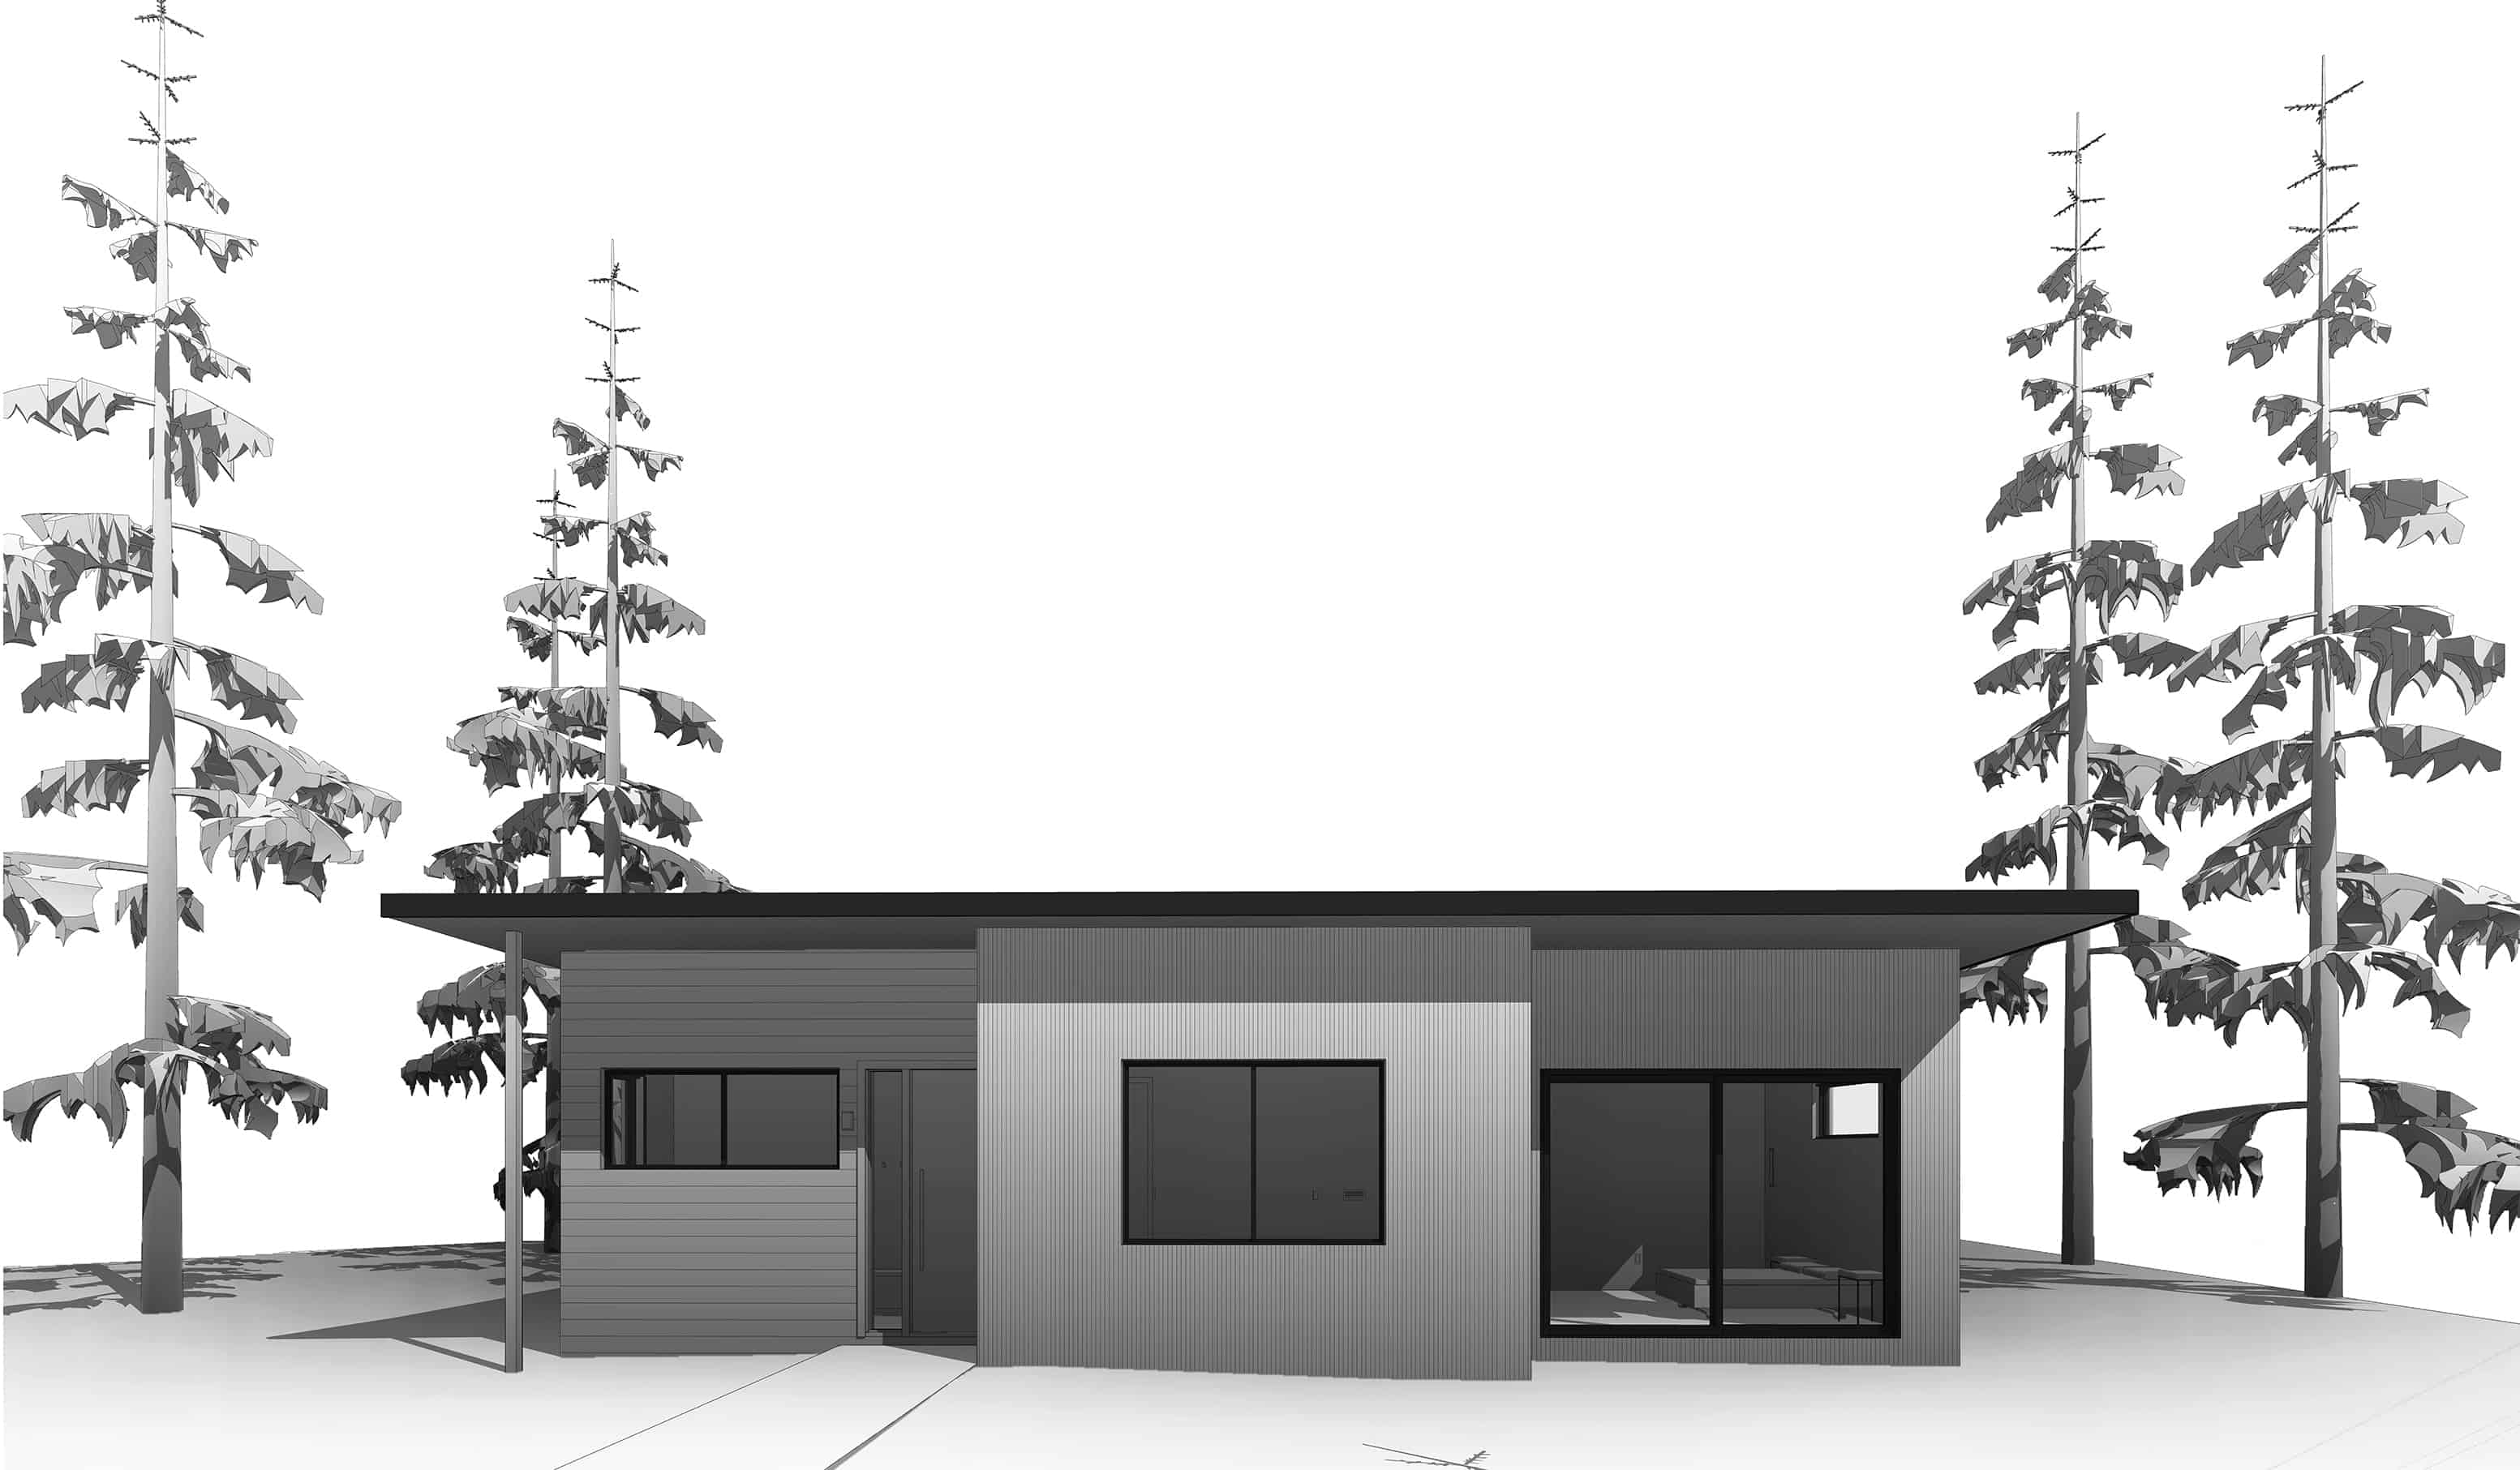 Dvele Midgard modern prefab home - front elevation drawing.